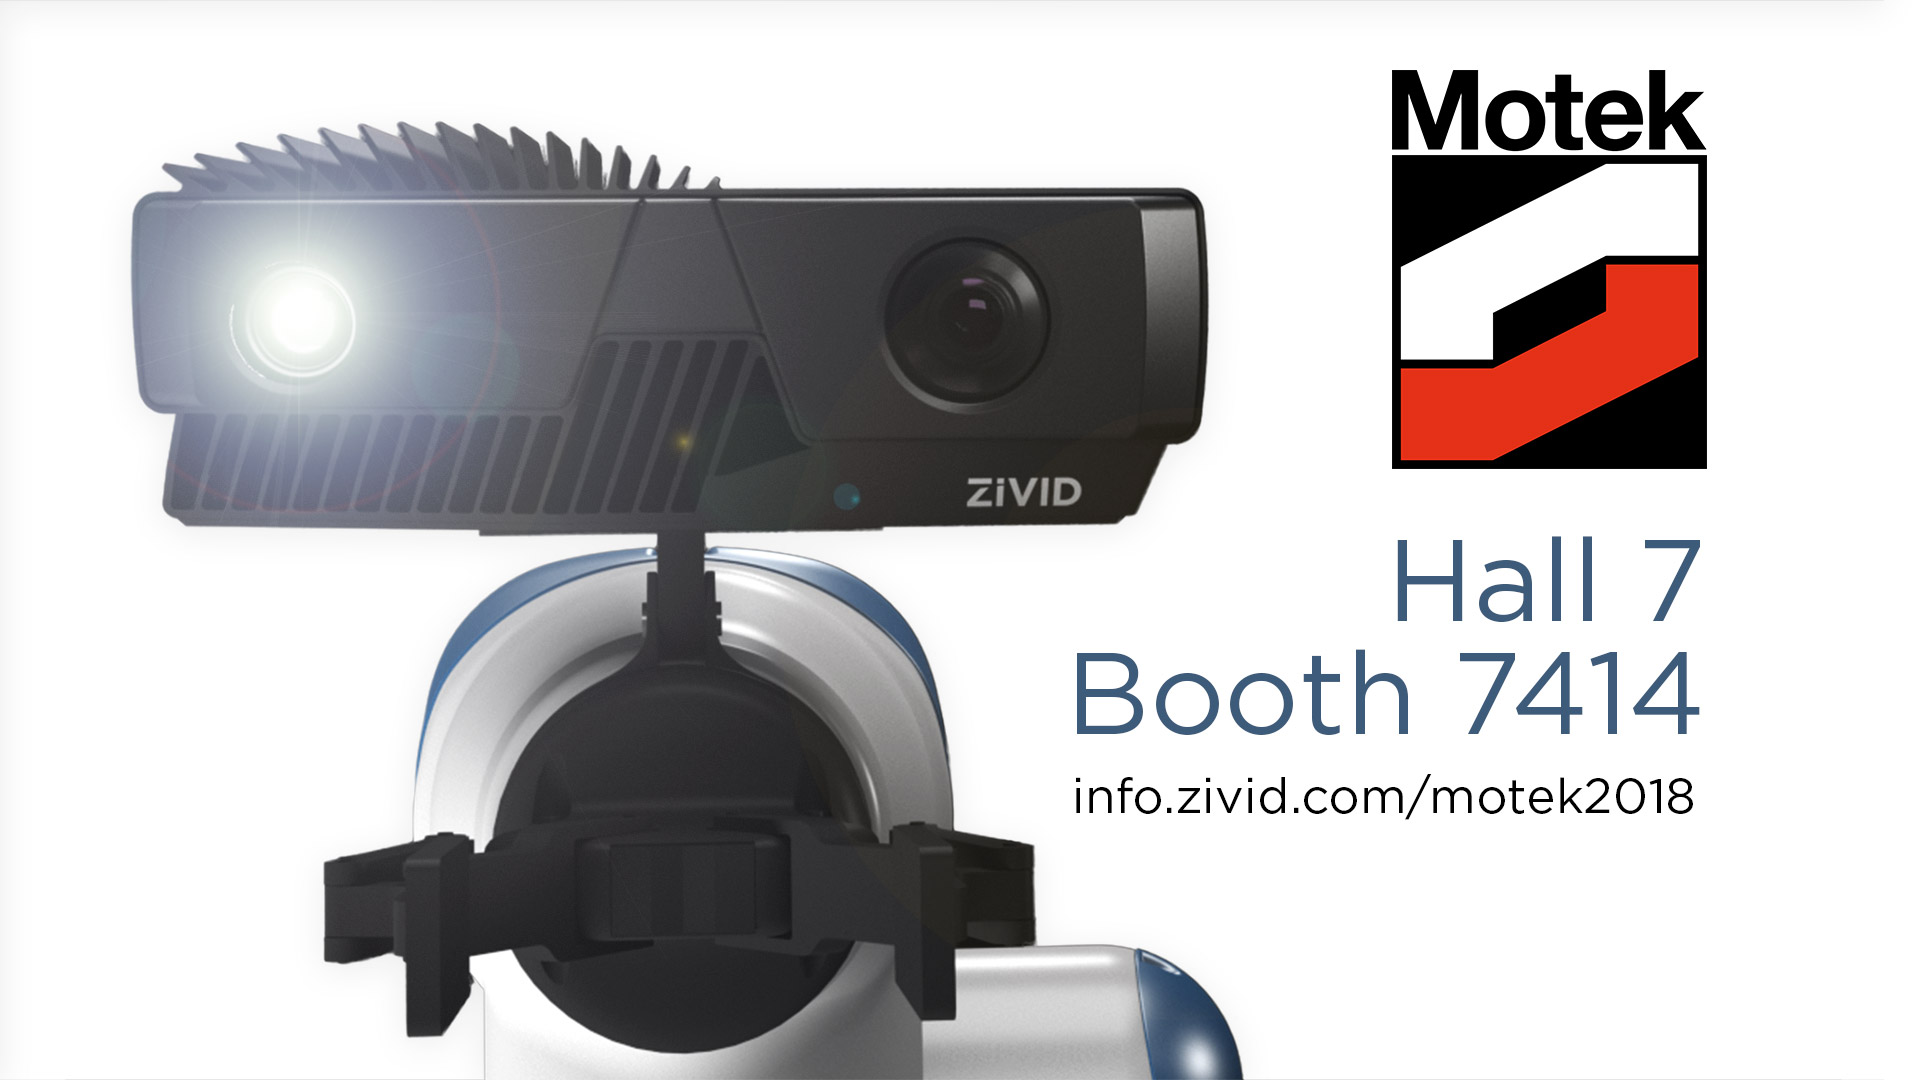 Zivid brings perfect 3D vision to Motek